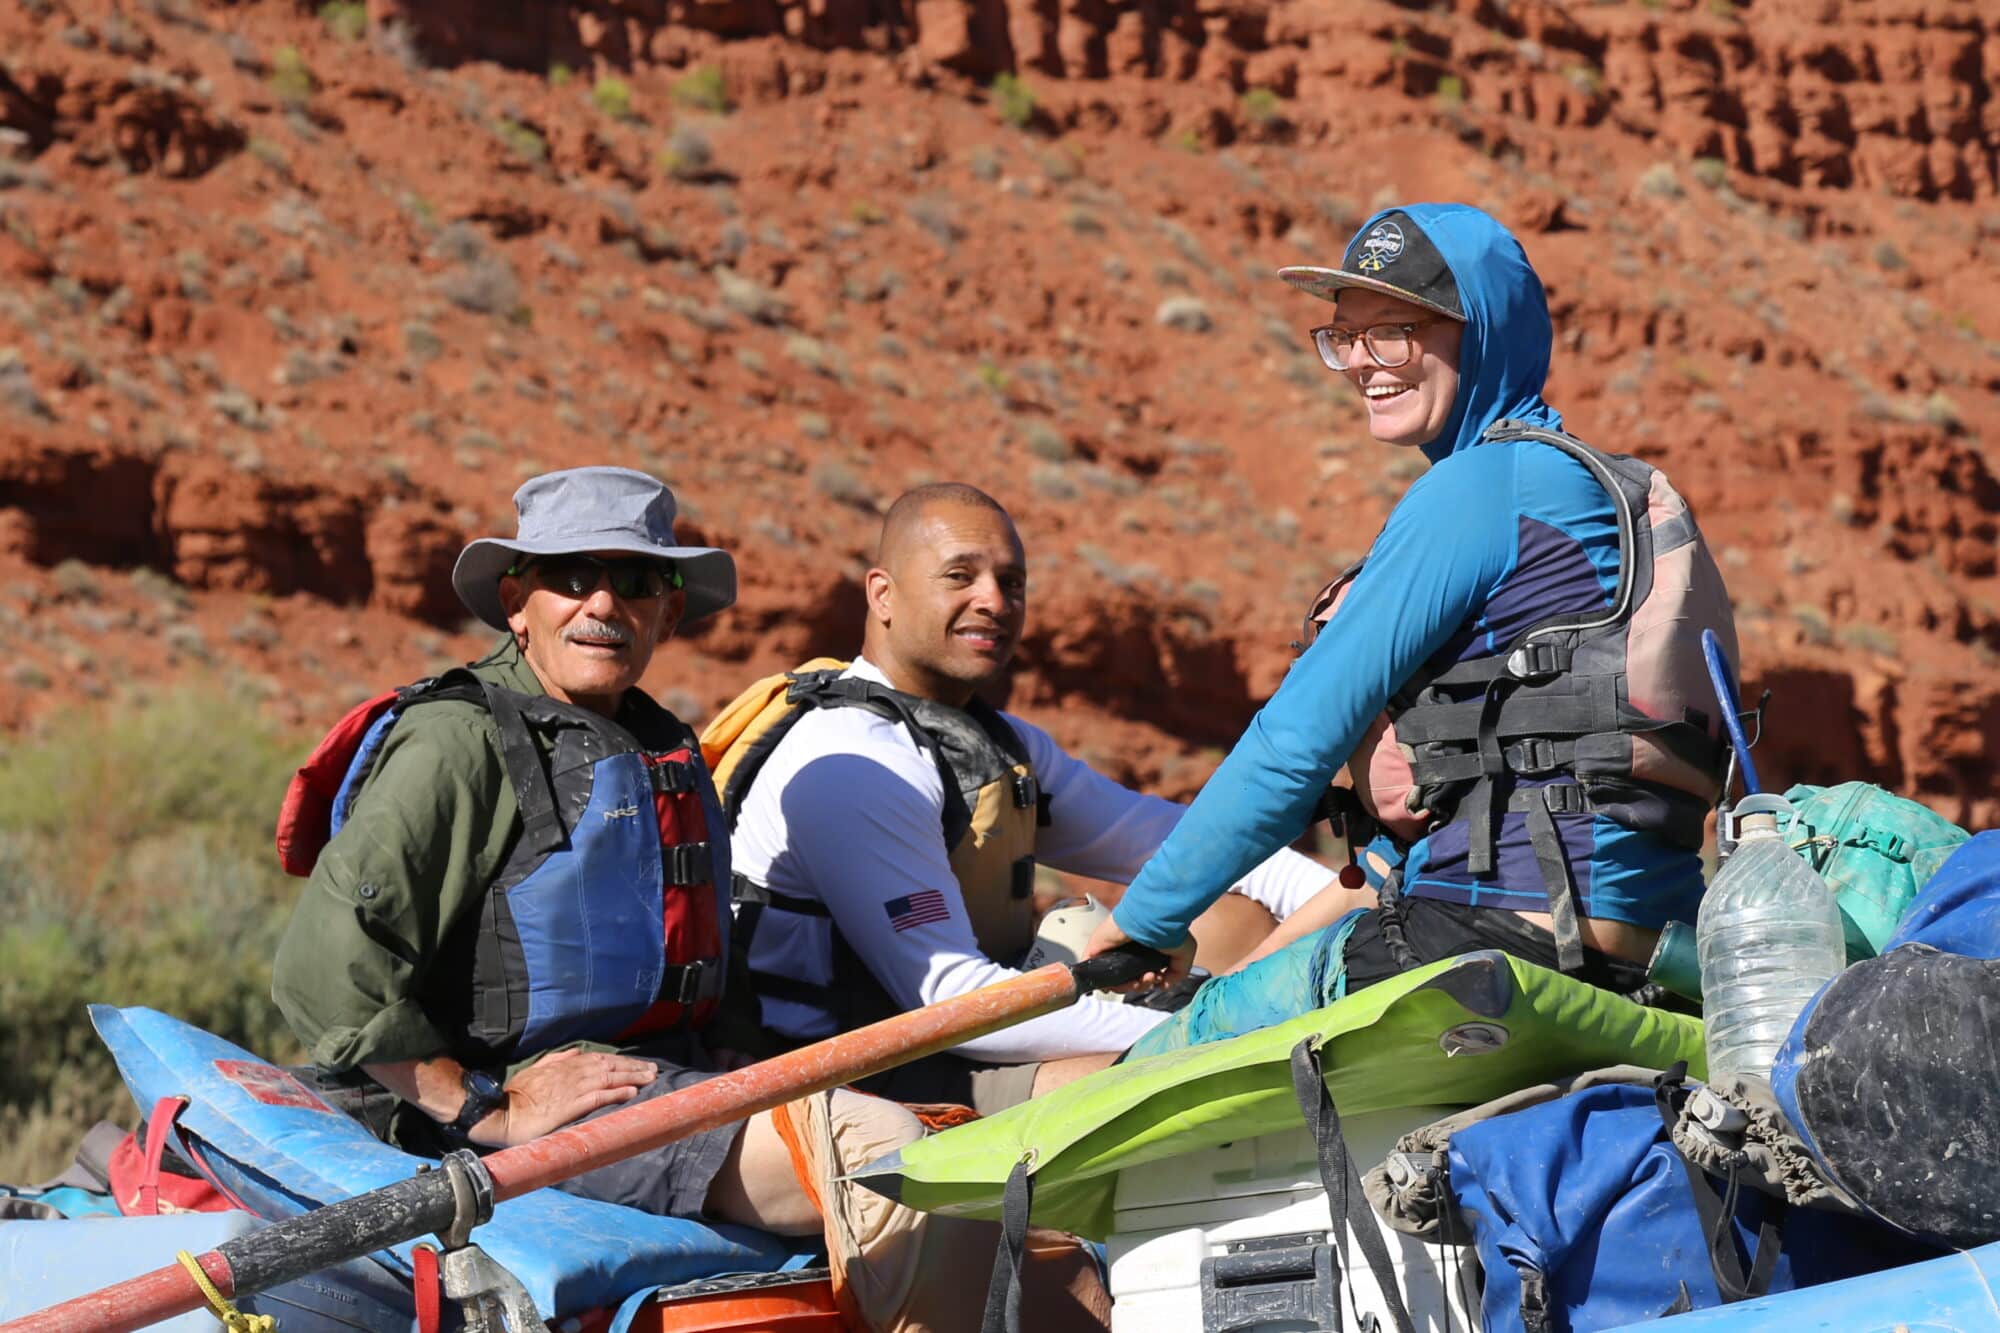 Adaptive sports takes a dessert raft trip